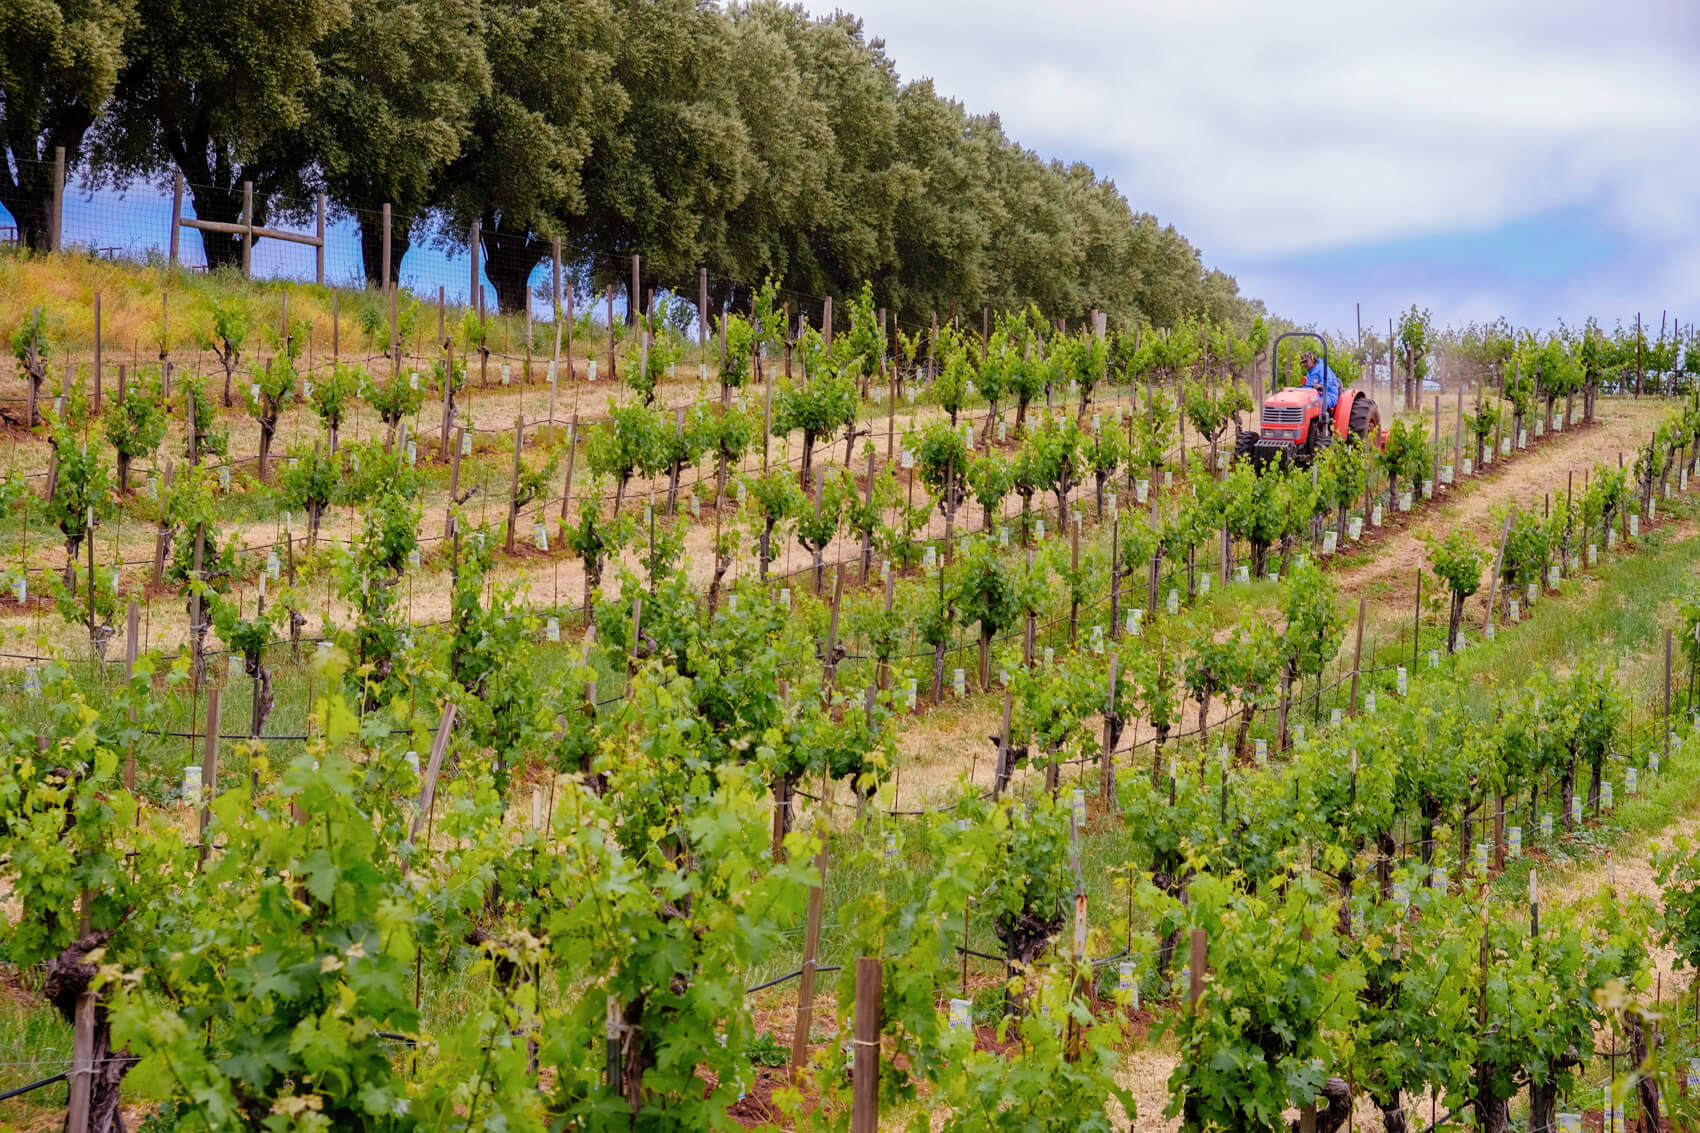 Dunn Vineyards' Tractor among vines